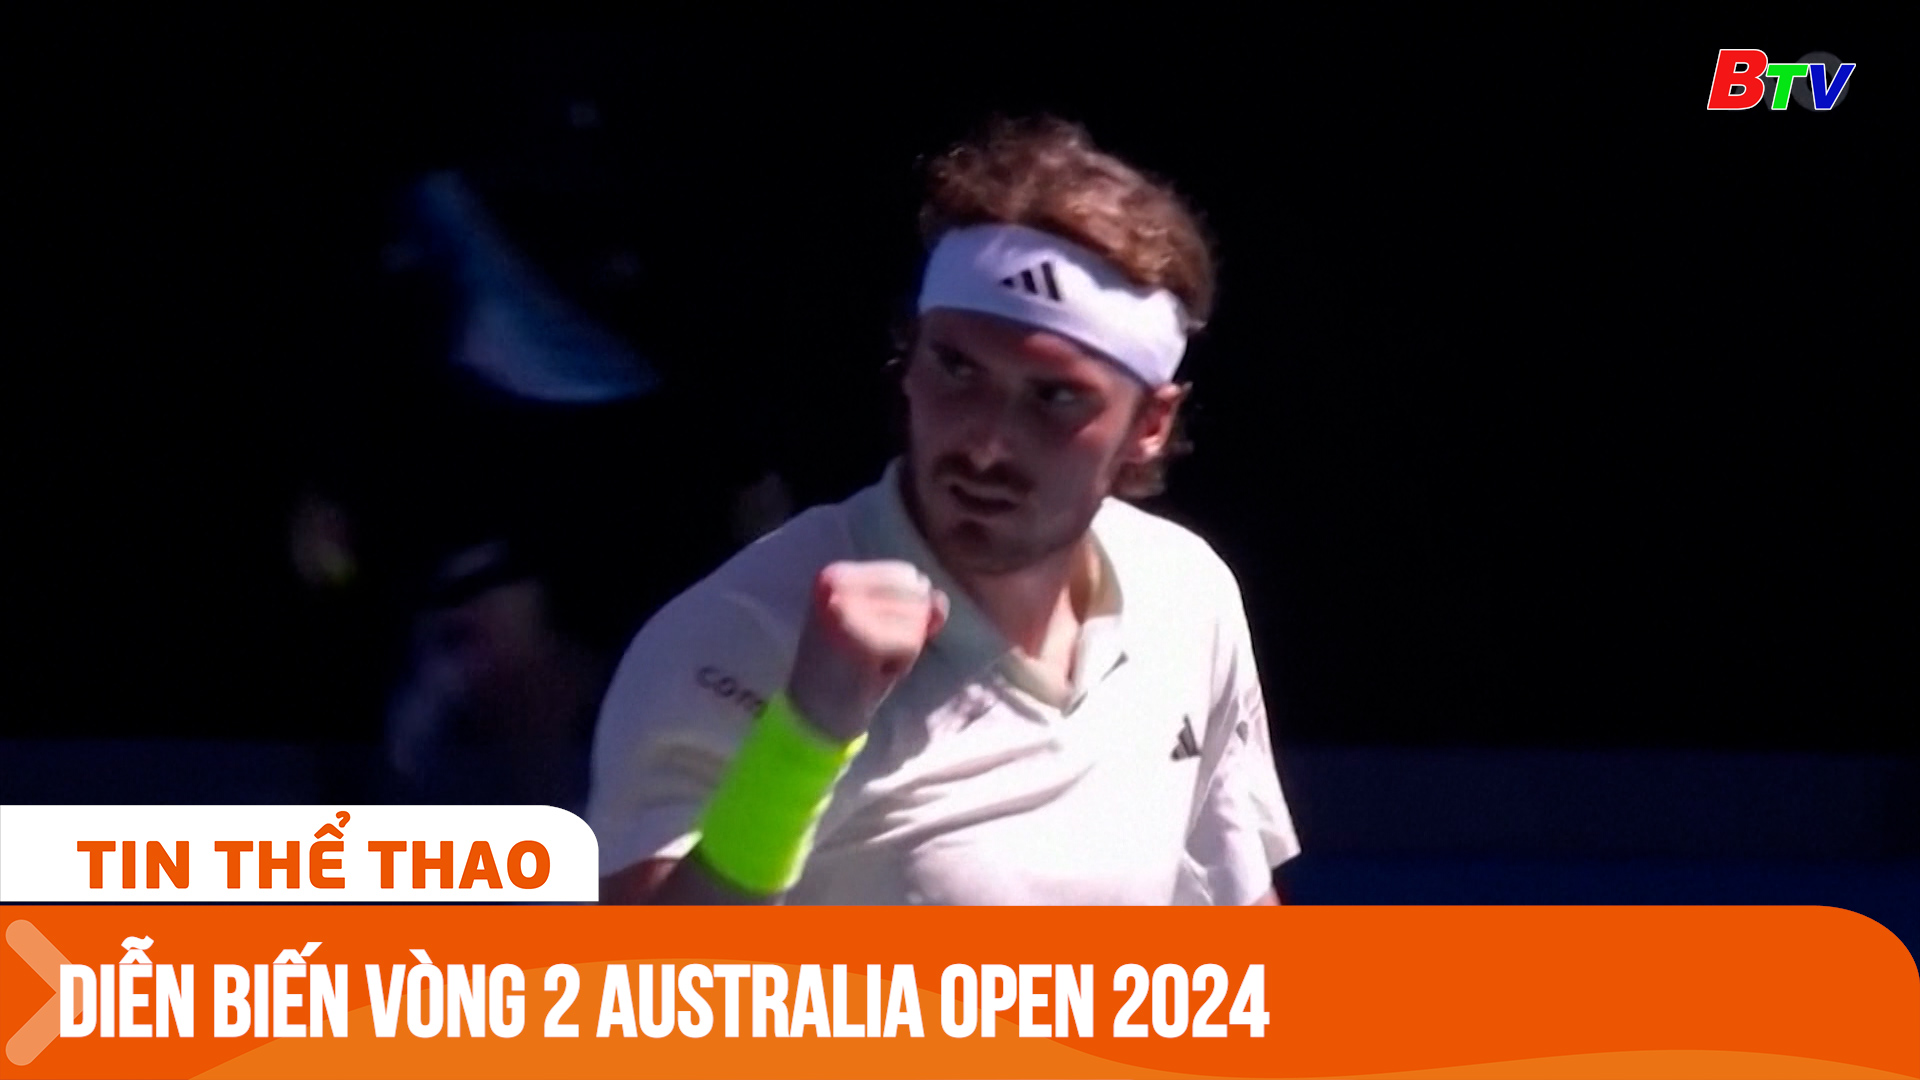 Diễn biến vòng 2 Australia Open 2024 | Tin Thể thao 24h	